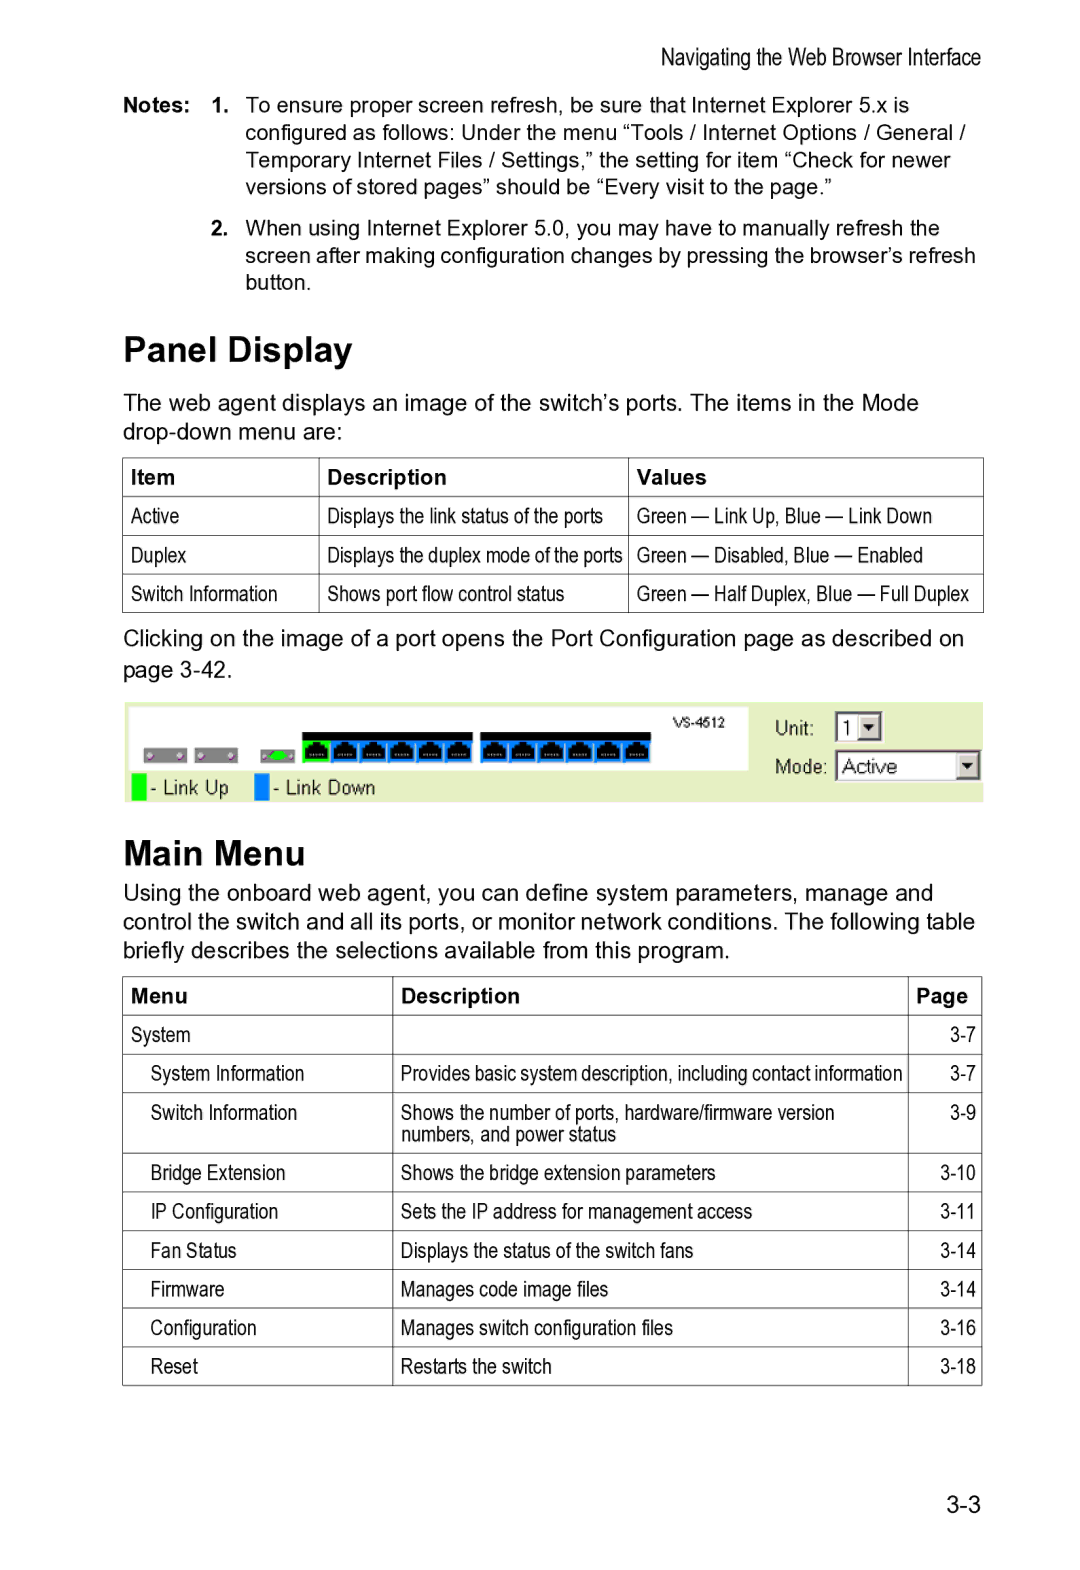 Accton Technology VS4512DC manual Panel Display, Main Menu, Description Values, Menu Description 